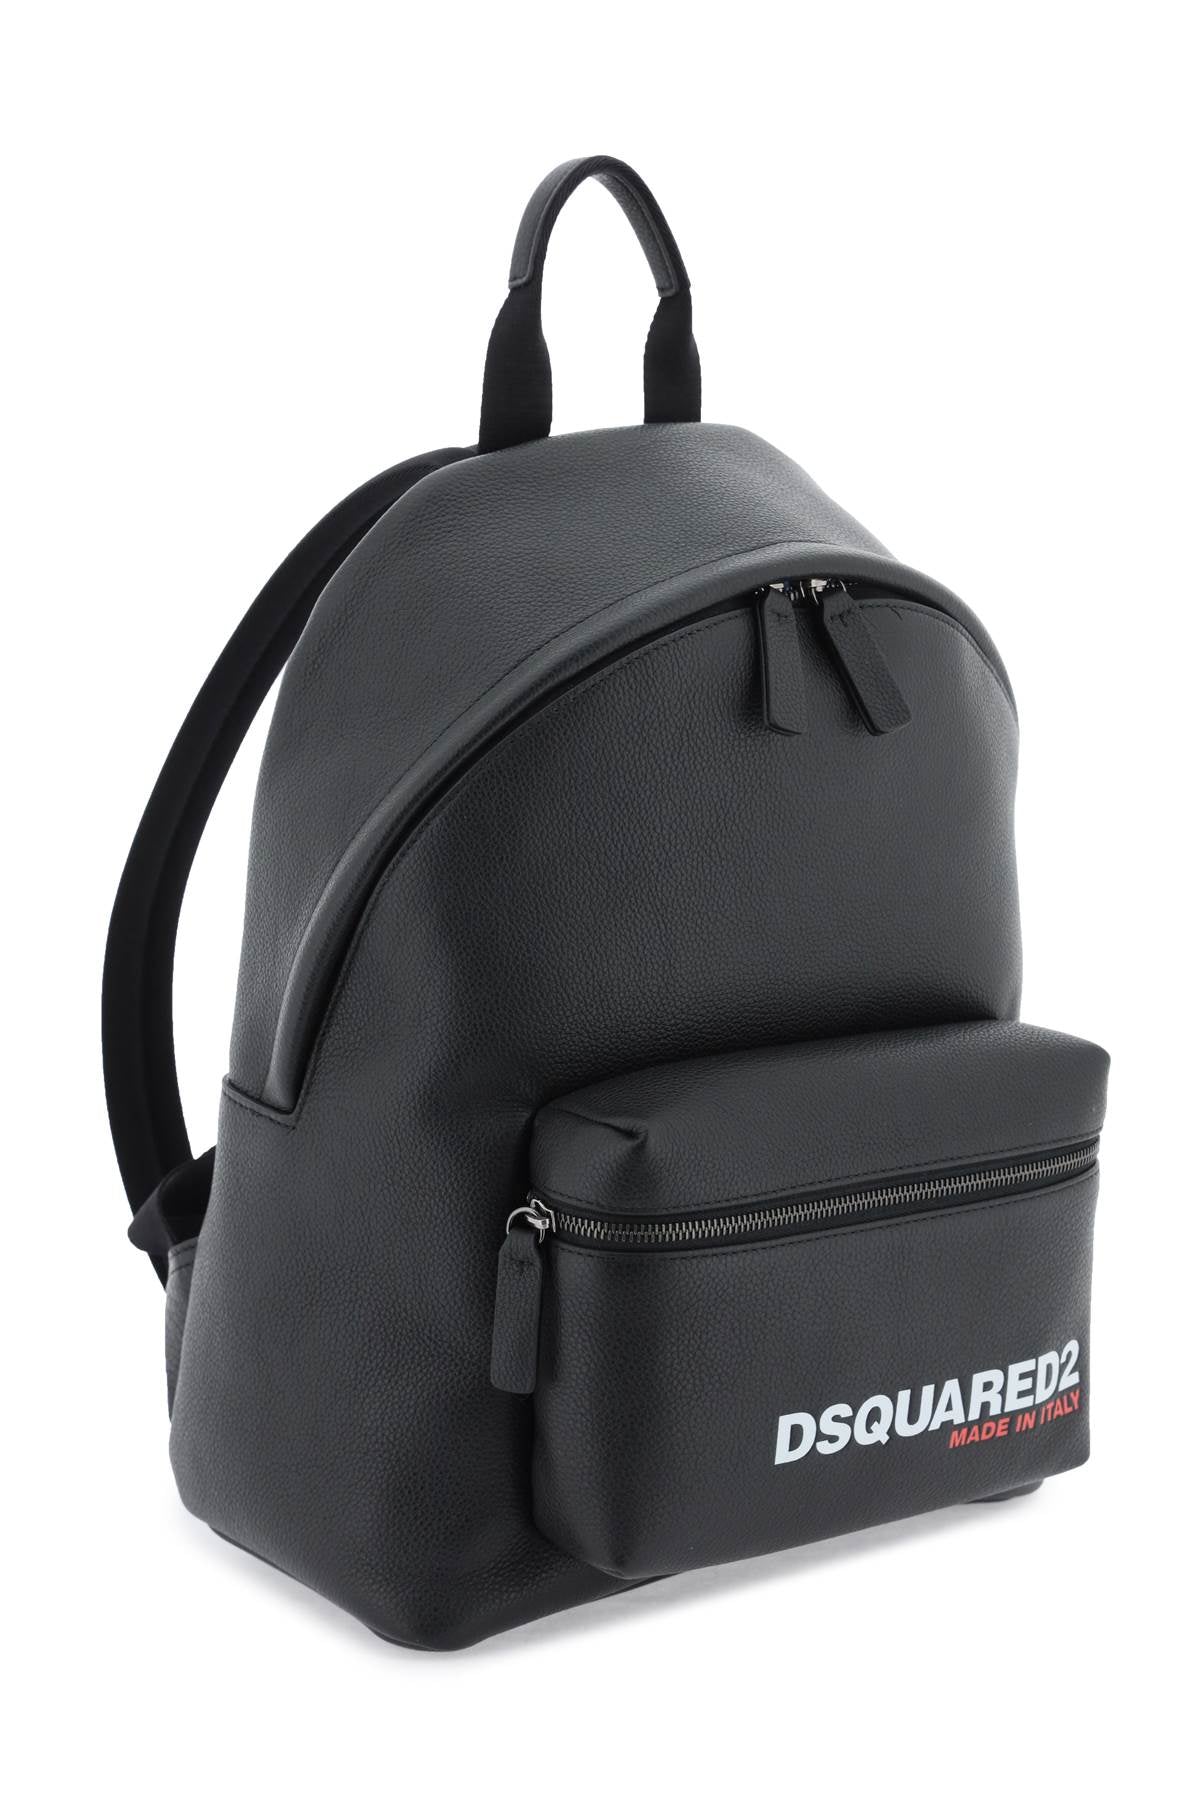 Dsquared2 bob backpack-2